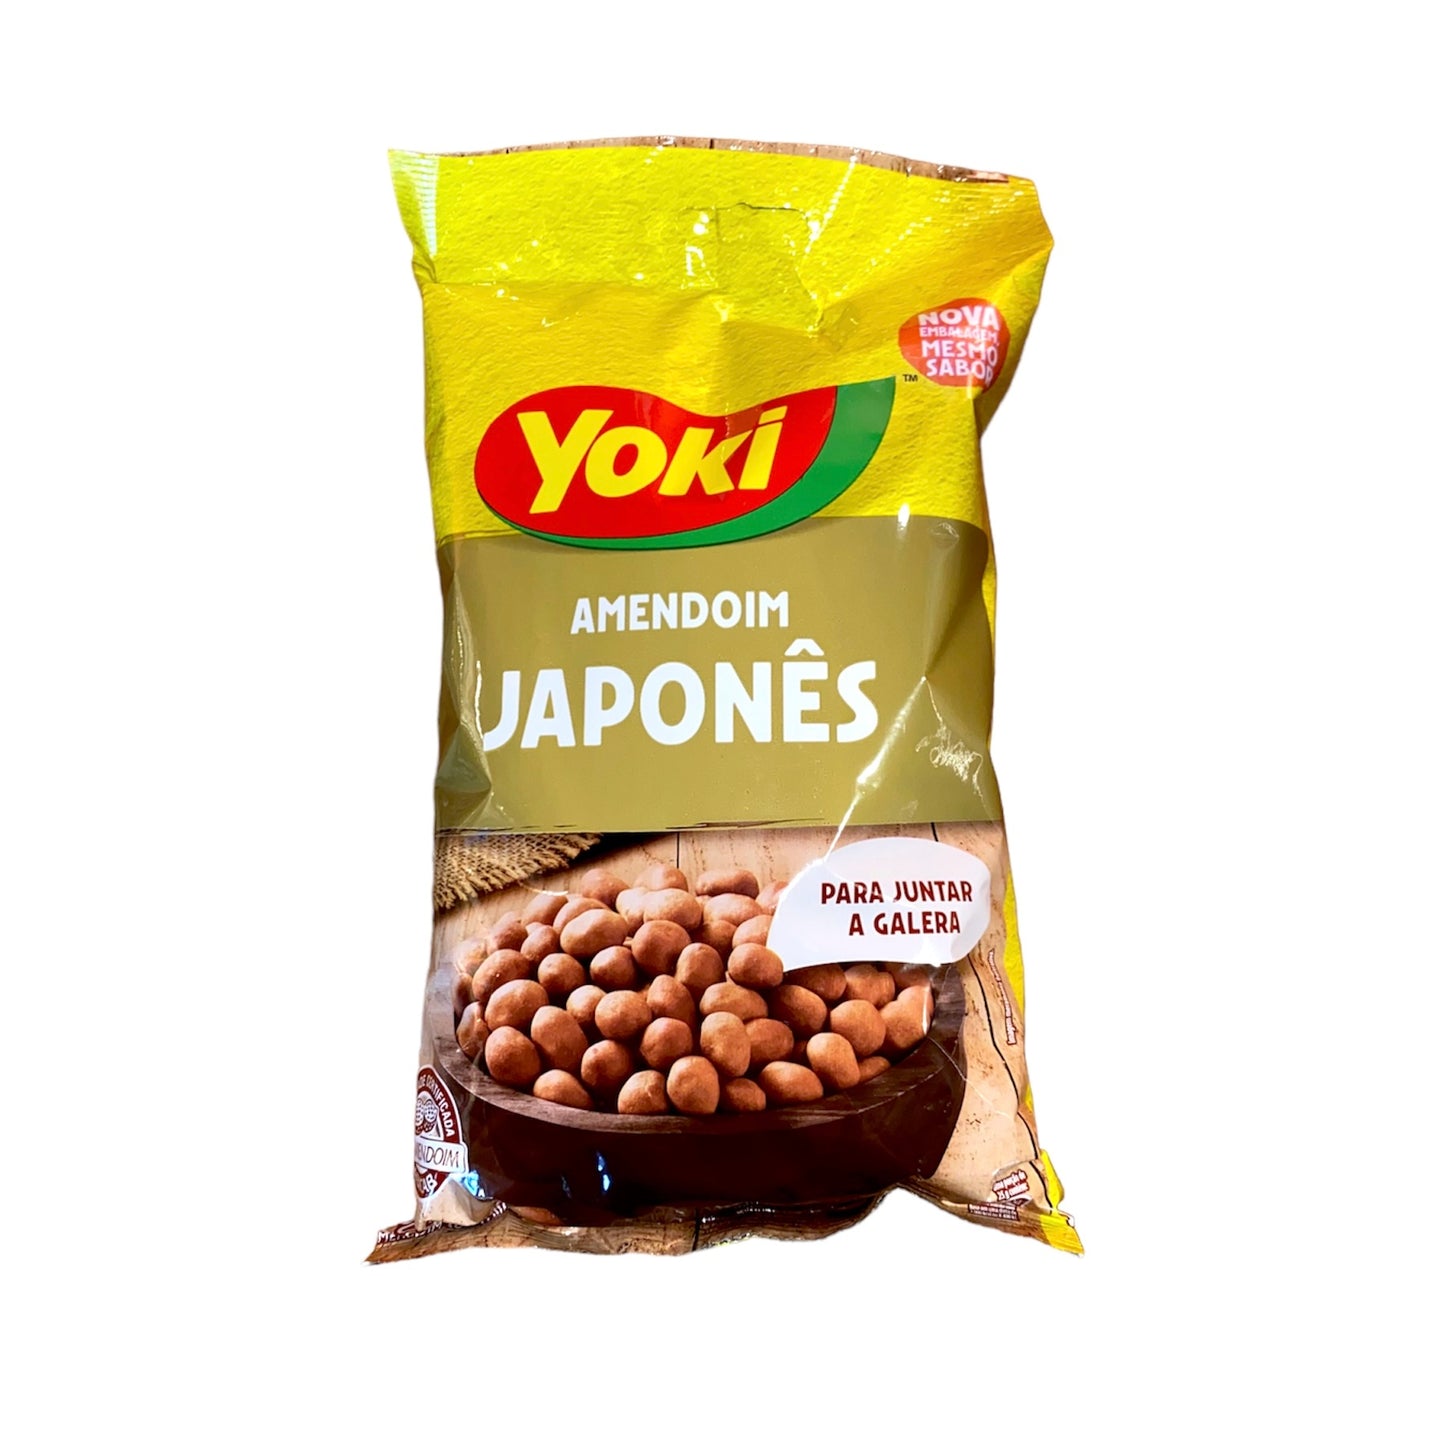 Yoki Japanese Style Peanuts | Amendoim tipo Japones